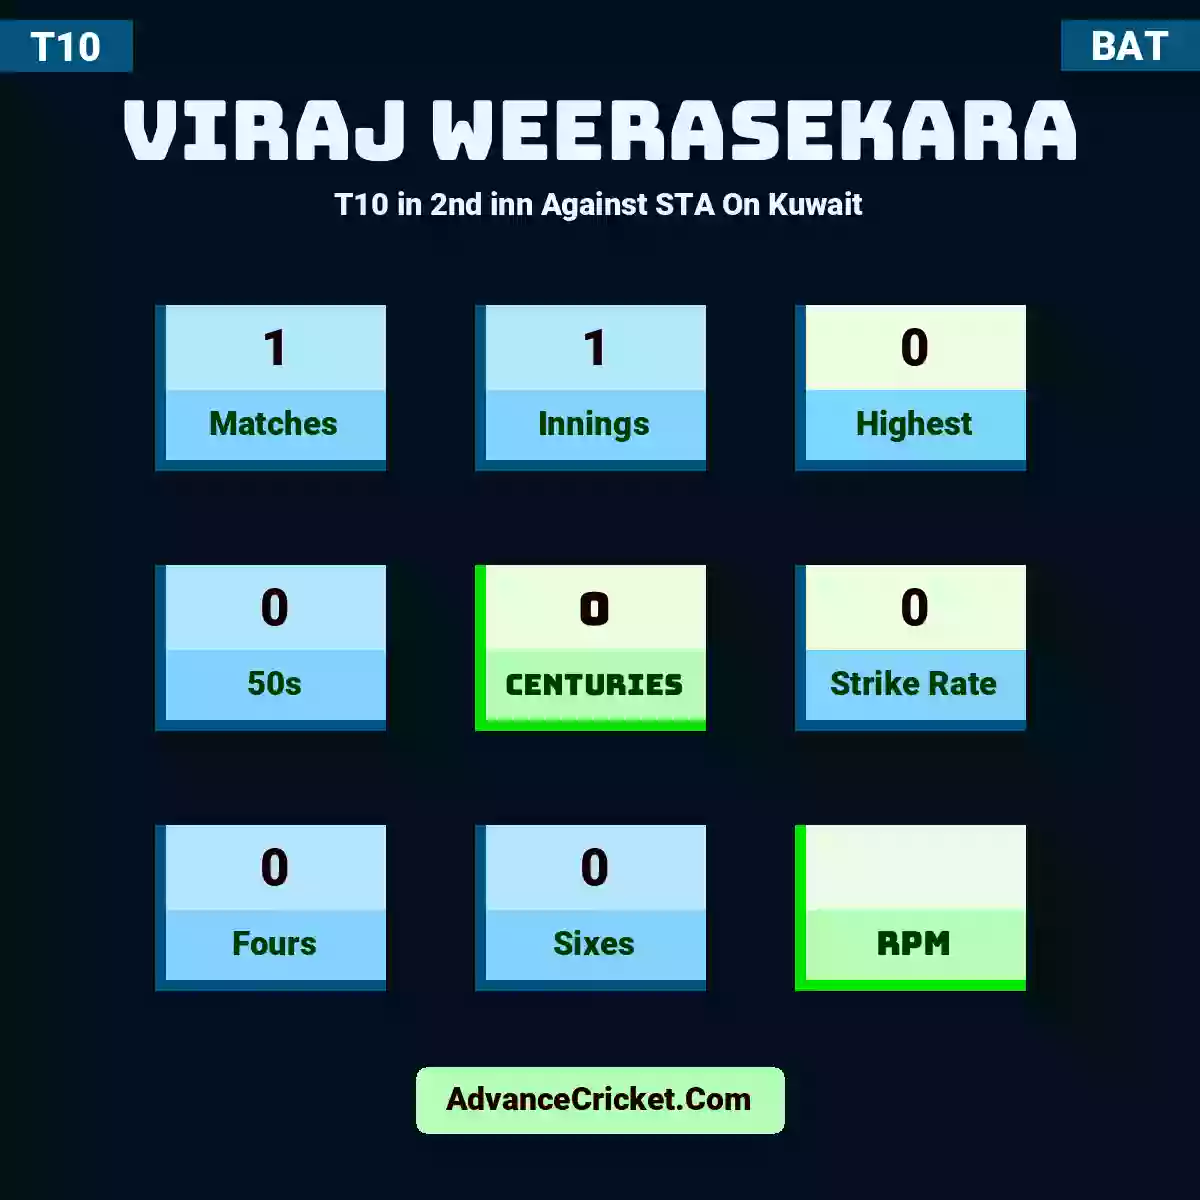 Viraj Weerasekara T10  in 2nd inn Against STA On Kuwait, Viraj Weerasekara played 1 matches, scored 0 runs as highest, 0 half-centuries, and 0 centuries, with a strike rate of 0. V.Weerasekara hit 0 fours and 0 sixes.